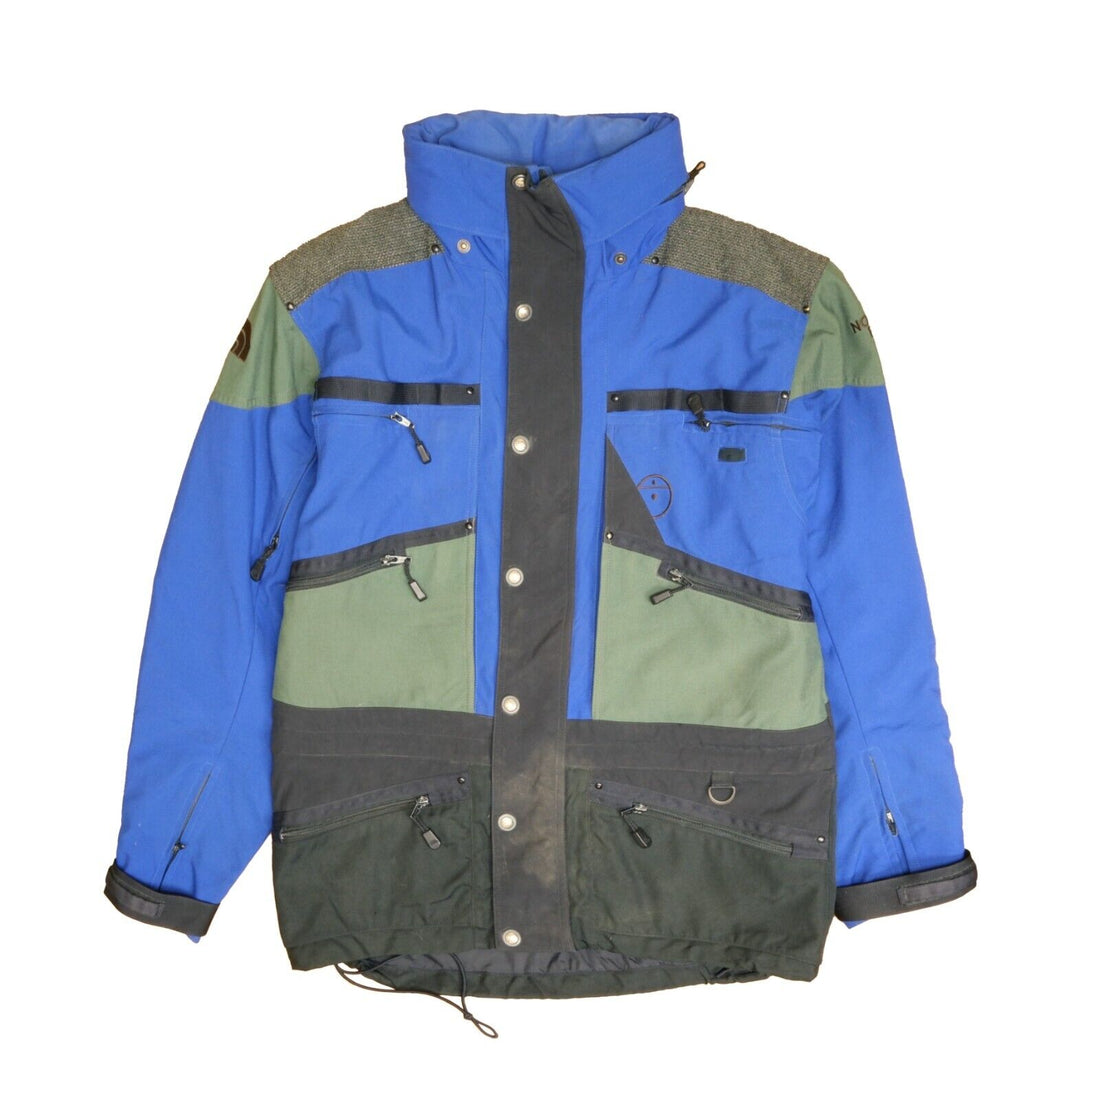 Vintage The North Face Steep Tech Ski Jacket Size Medium Blue